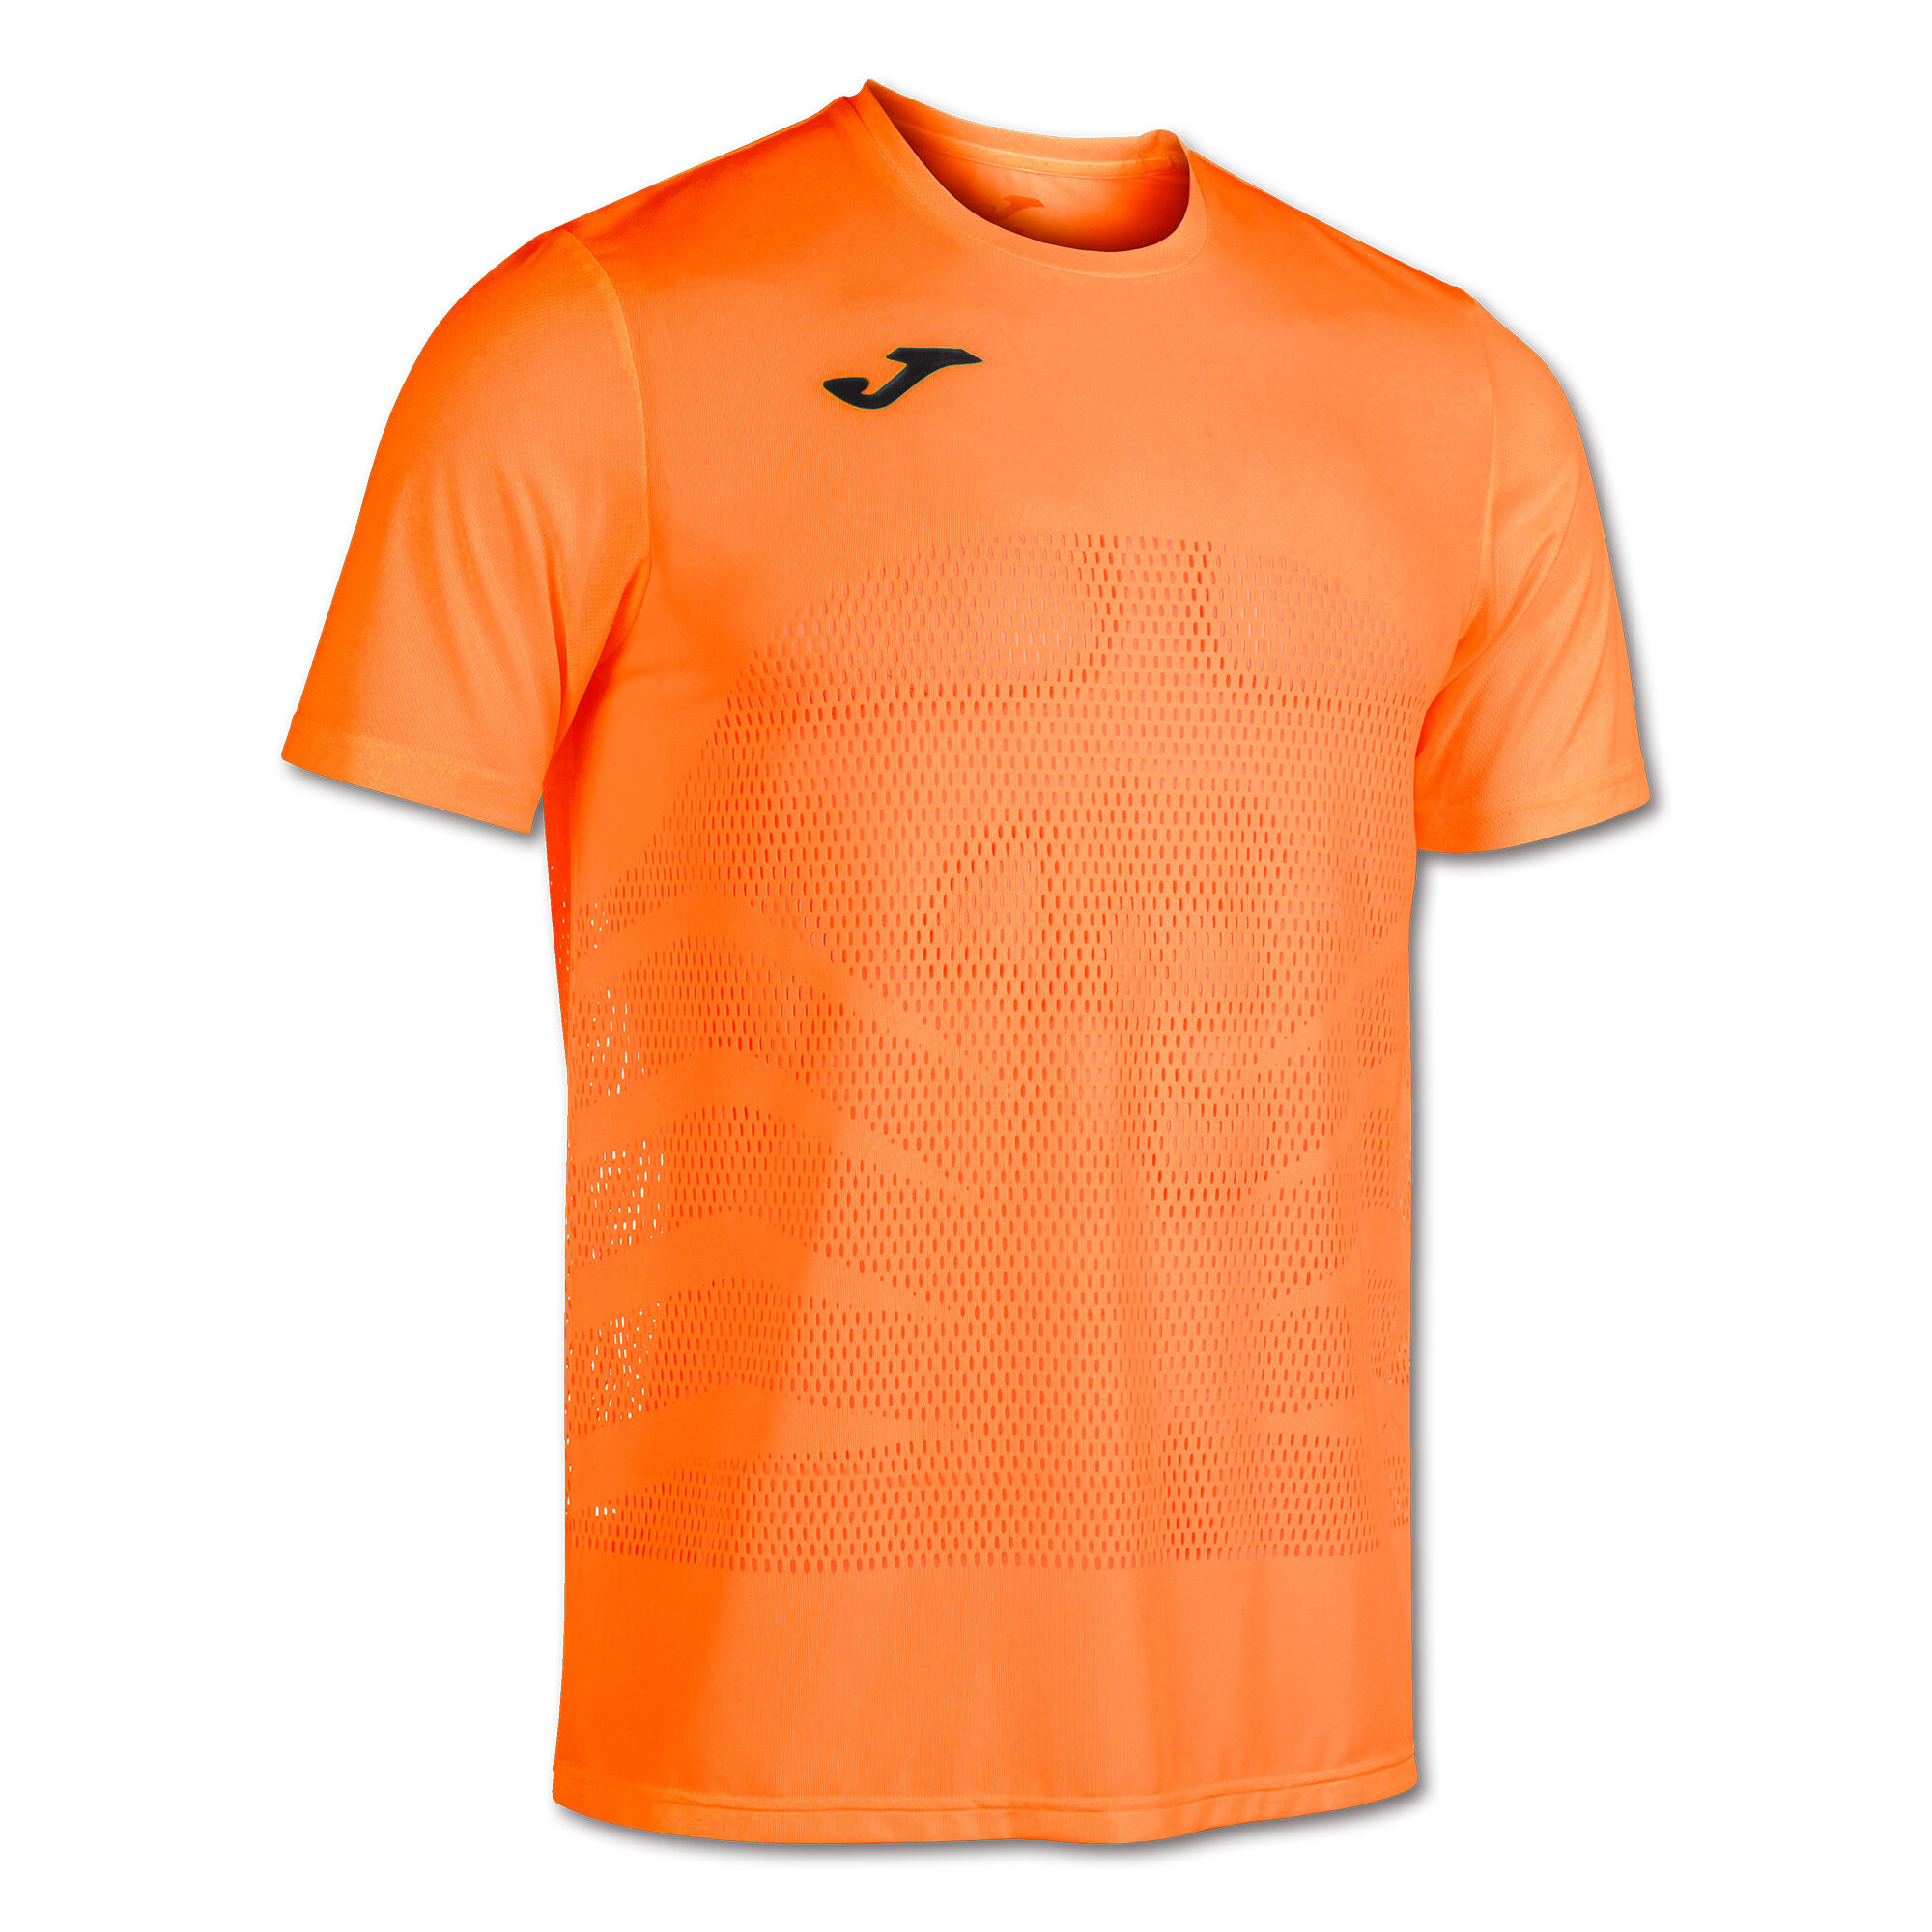 Camiseta manga corta hombre Marathon naranja flúor